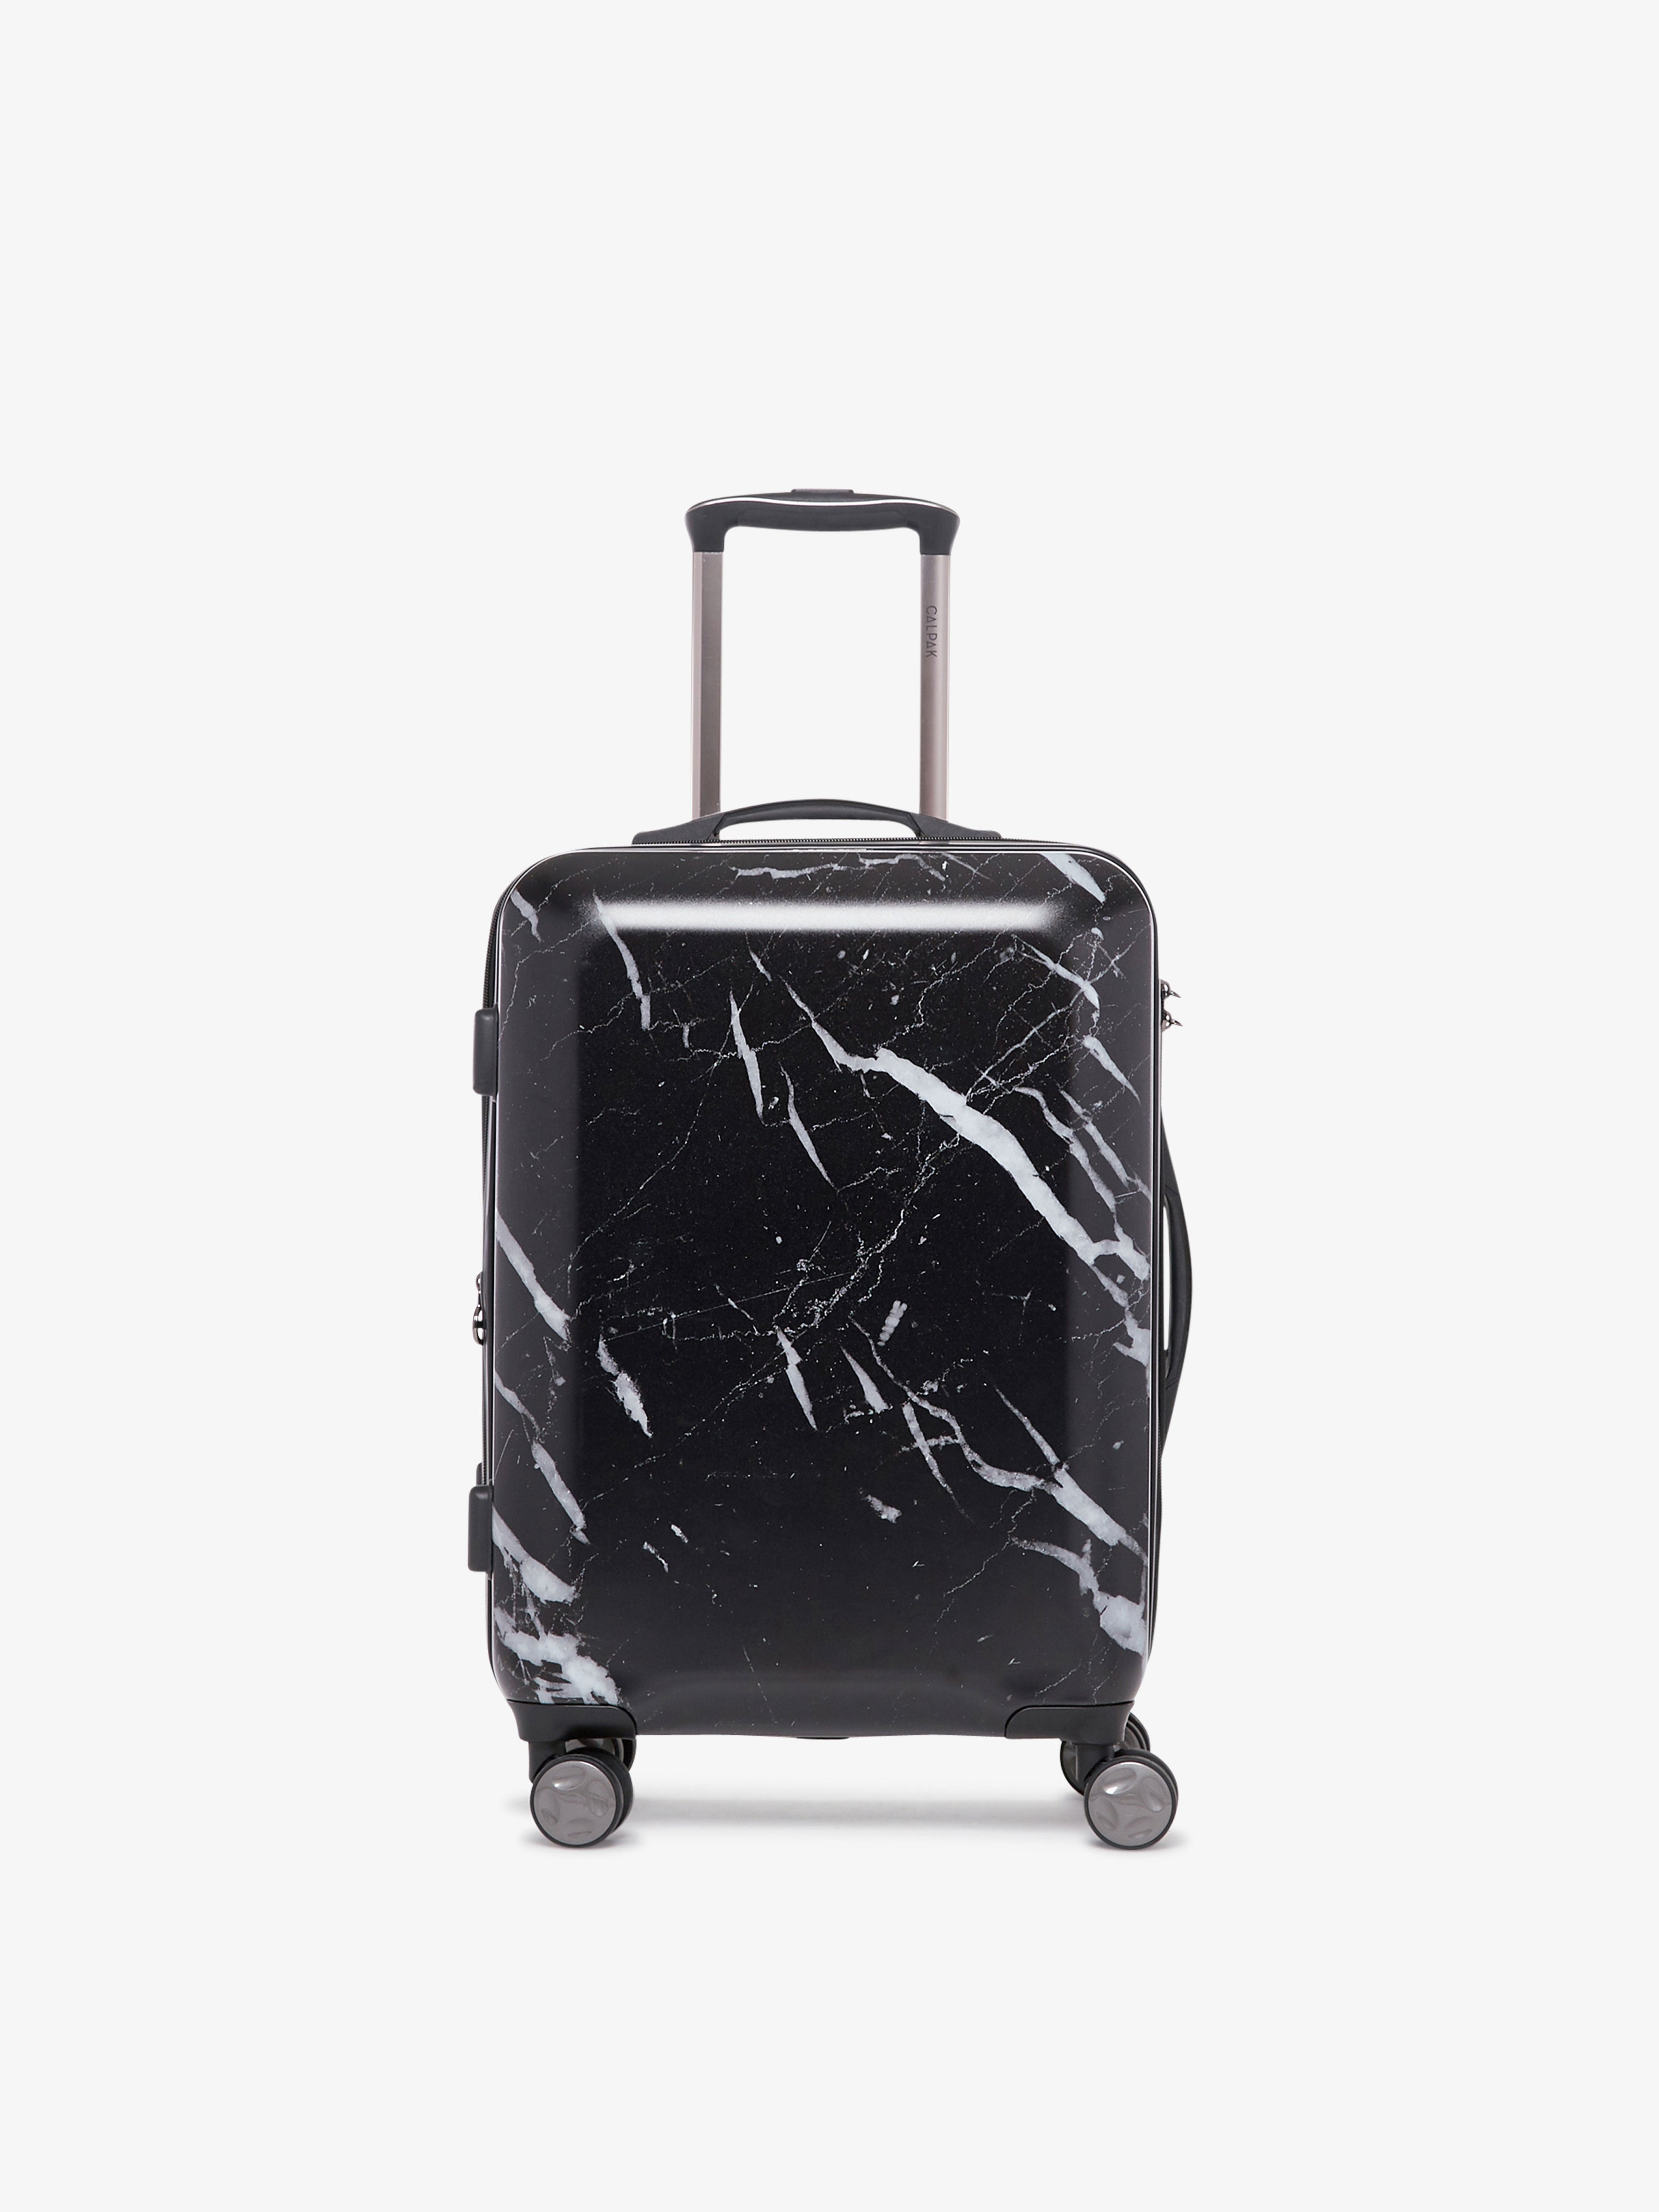 Astyll 3-Piece luggage set carry-on luggage